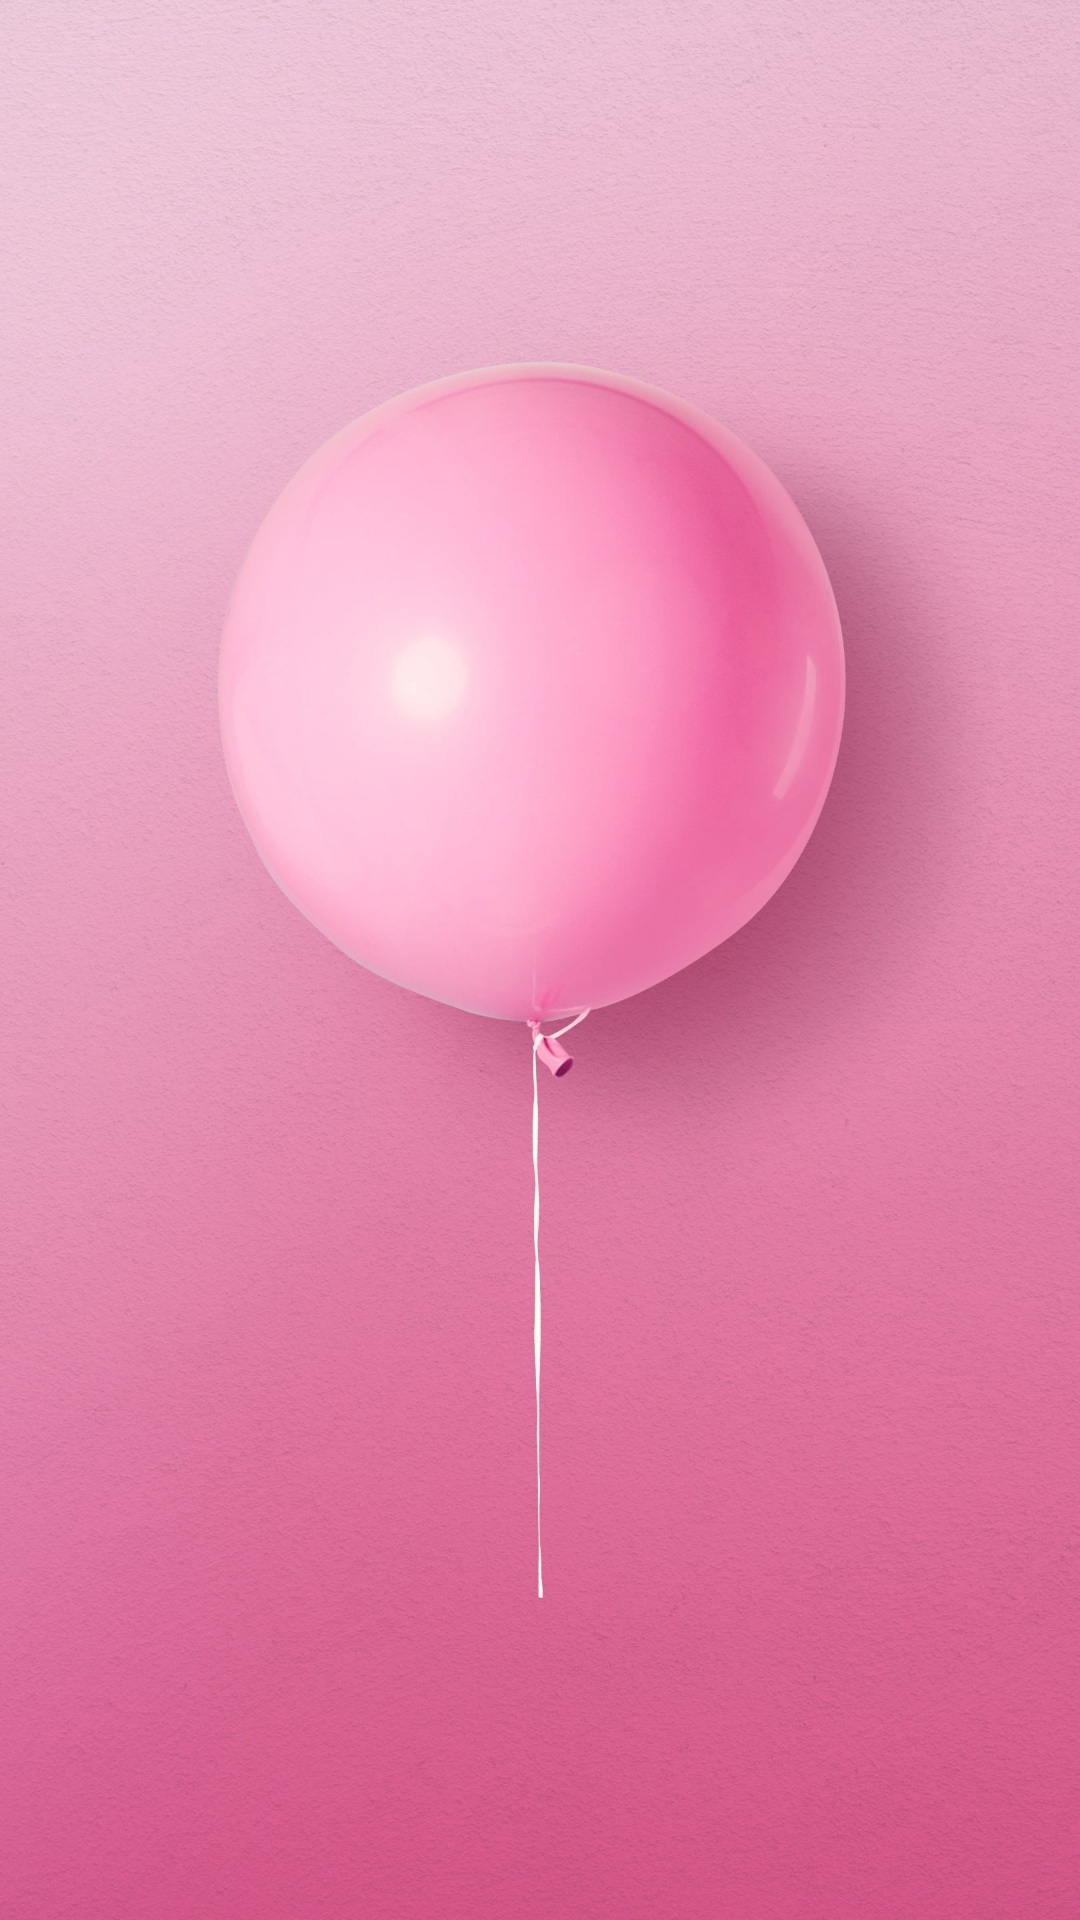 Pink Minimalist iPhone Wallpaper